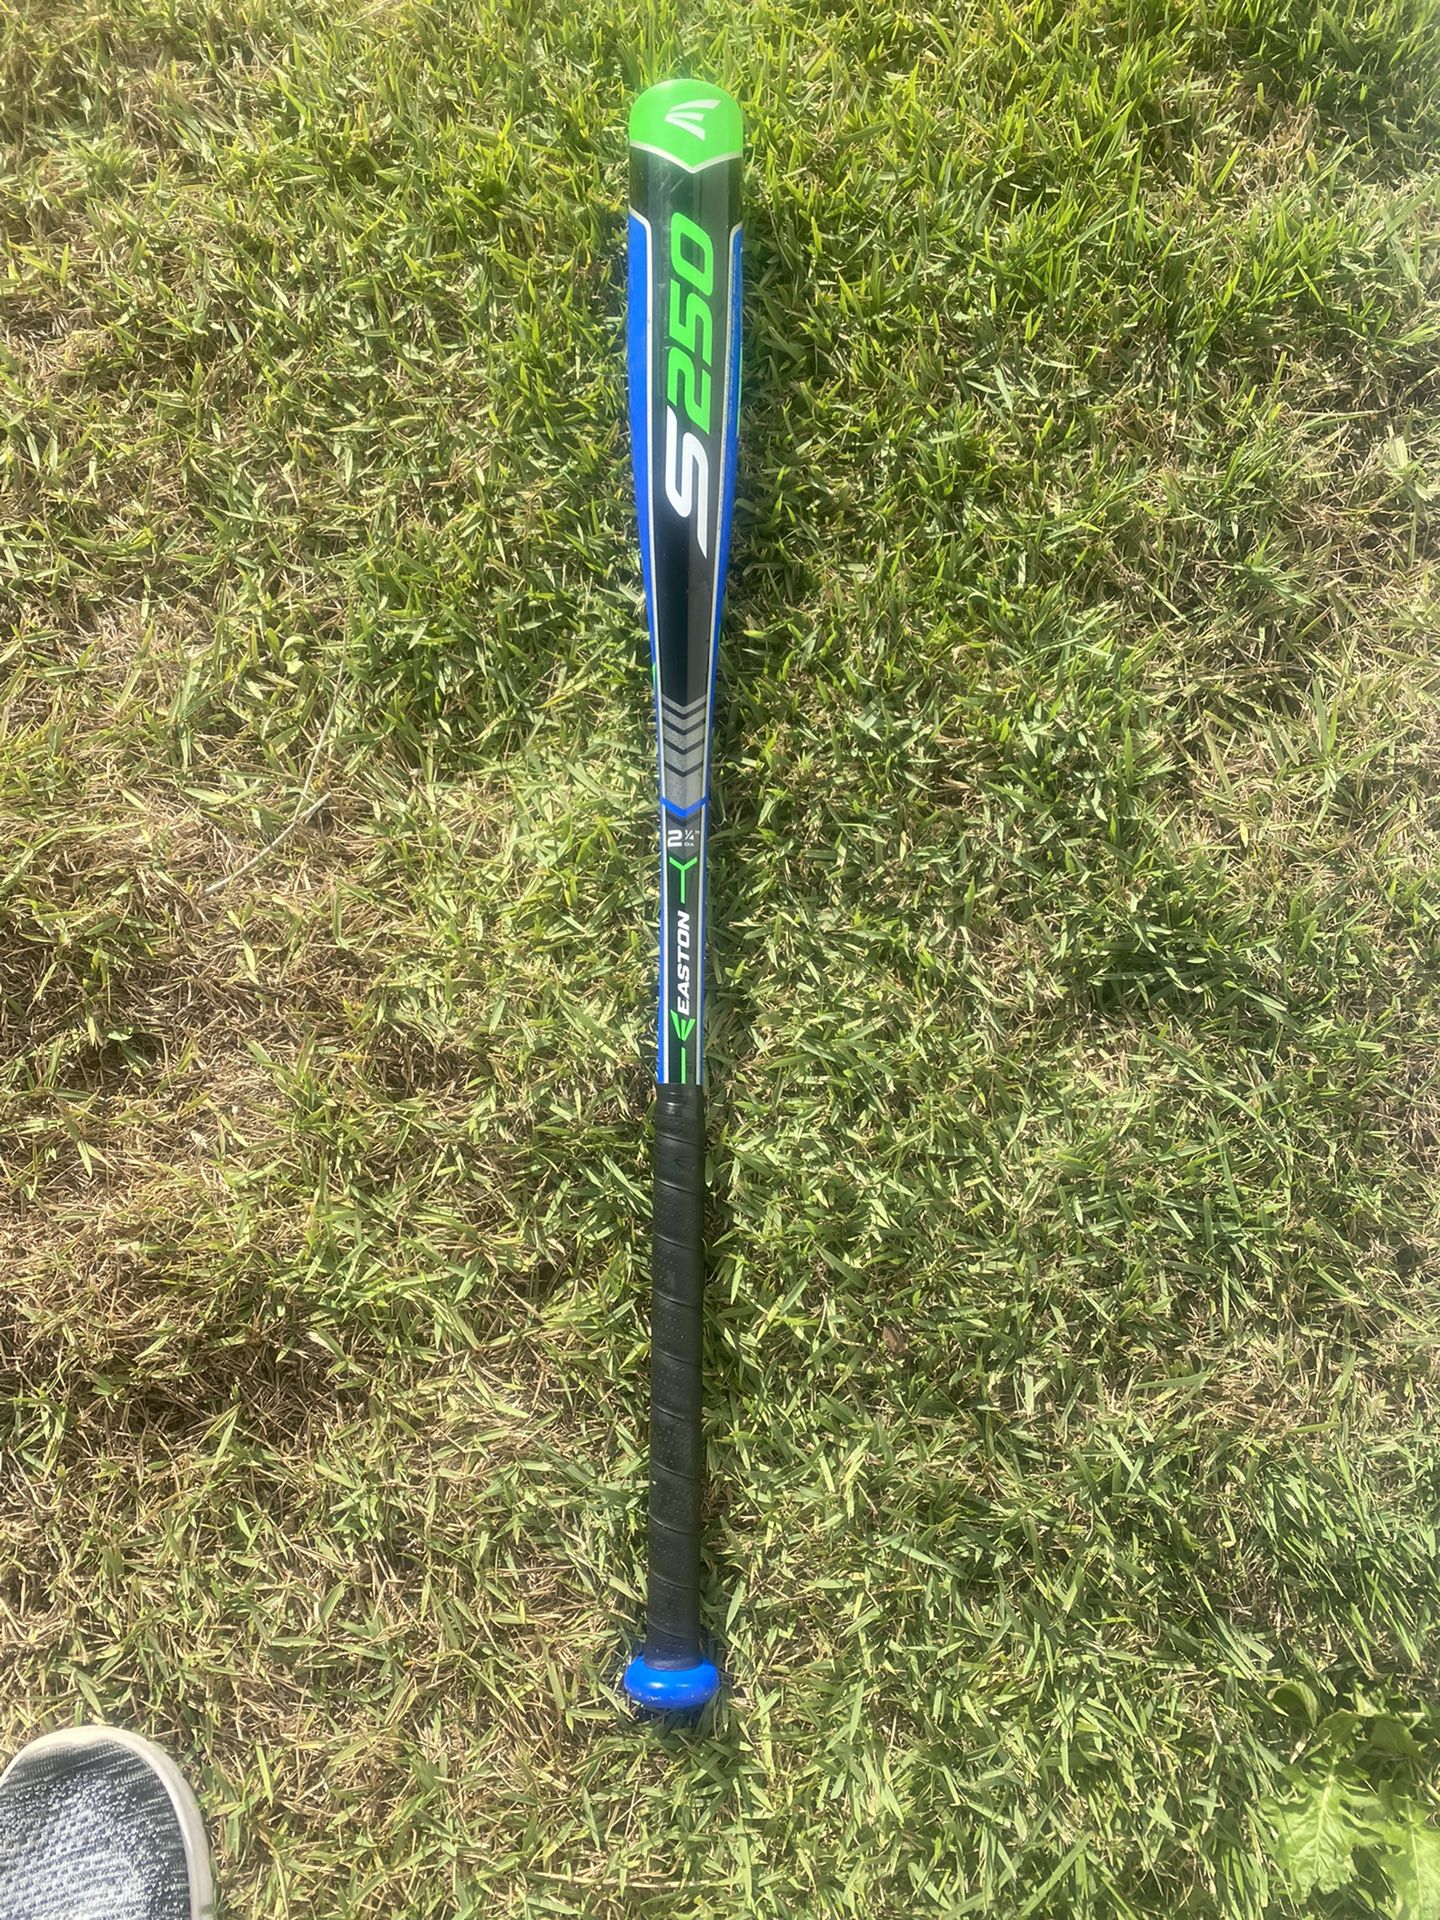 Easton S250 Speed Brigade Little League baseball bat 30 inch 20 oz 2-1/4” barrel . Free Ship